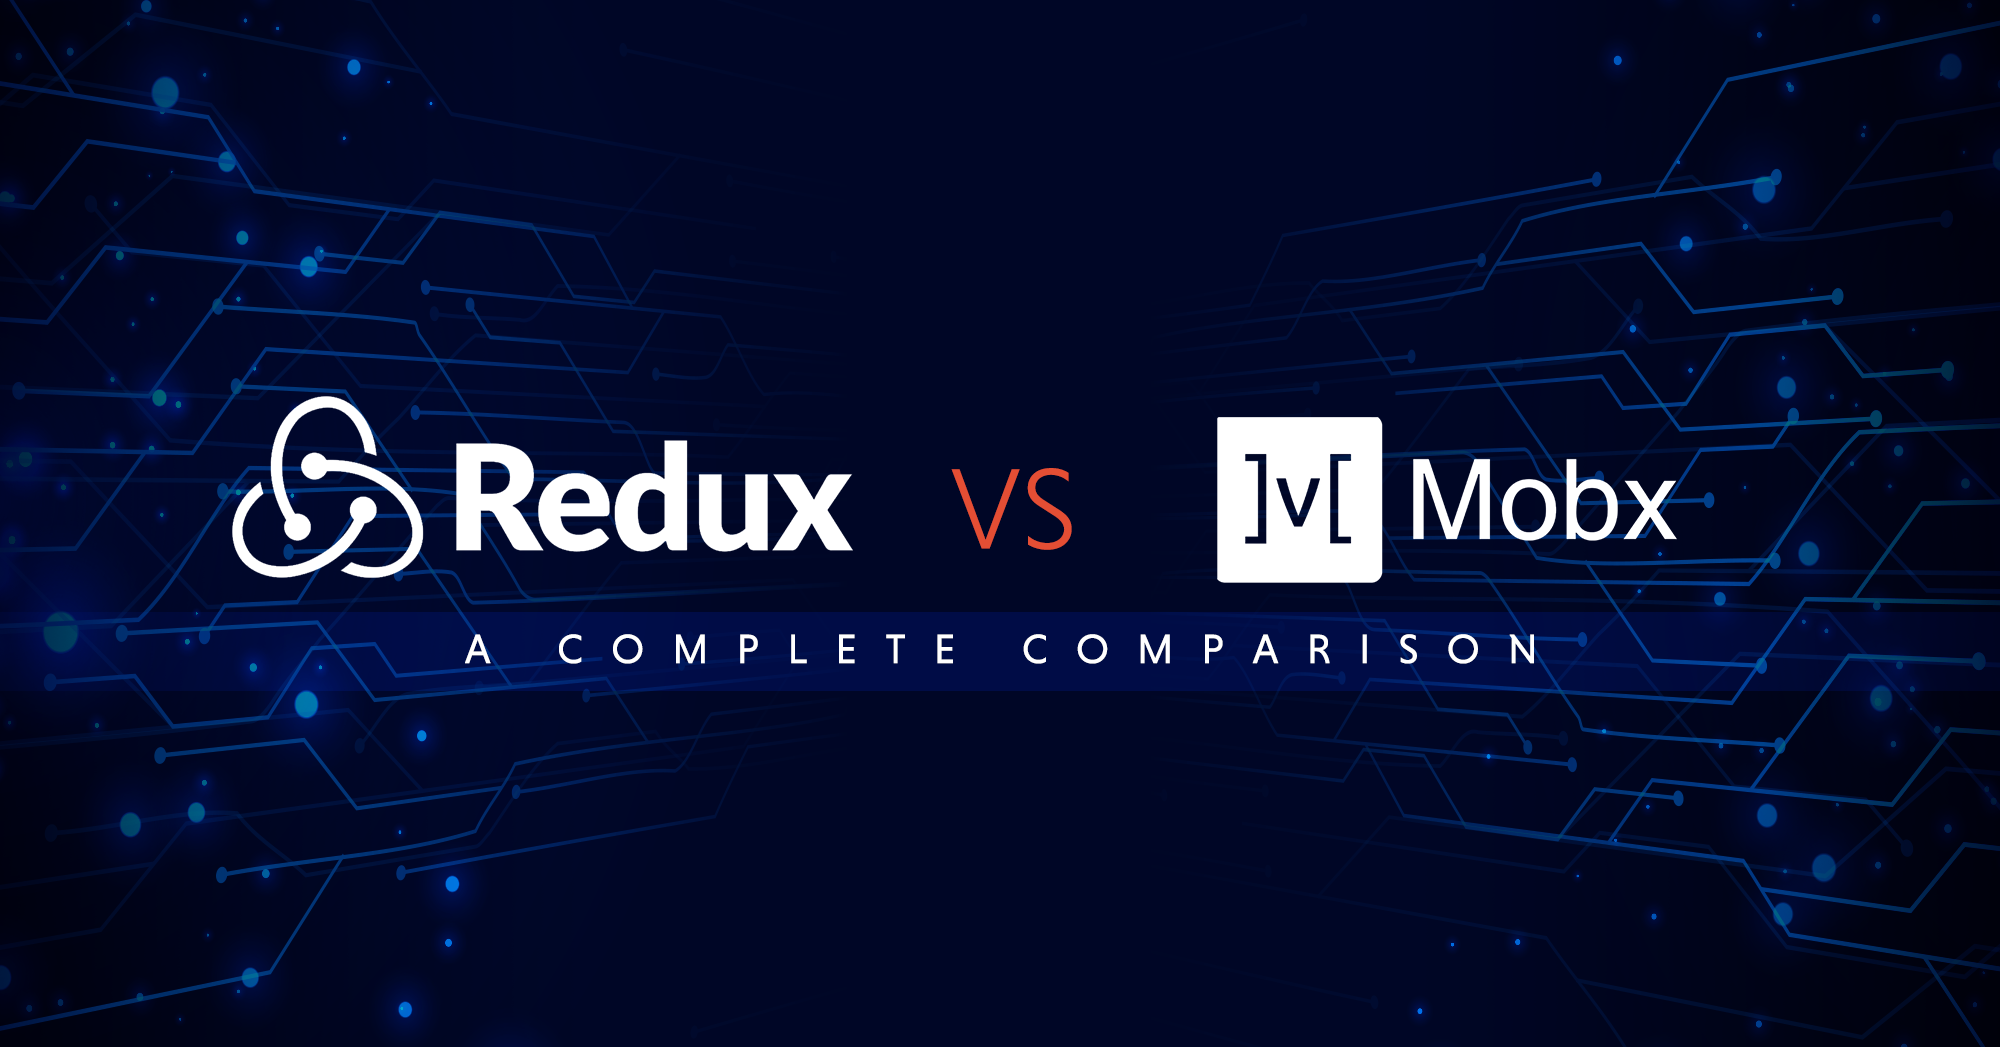 Redux vs Mobx